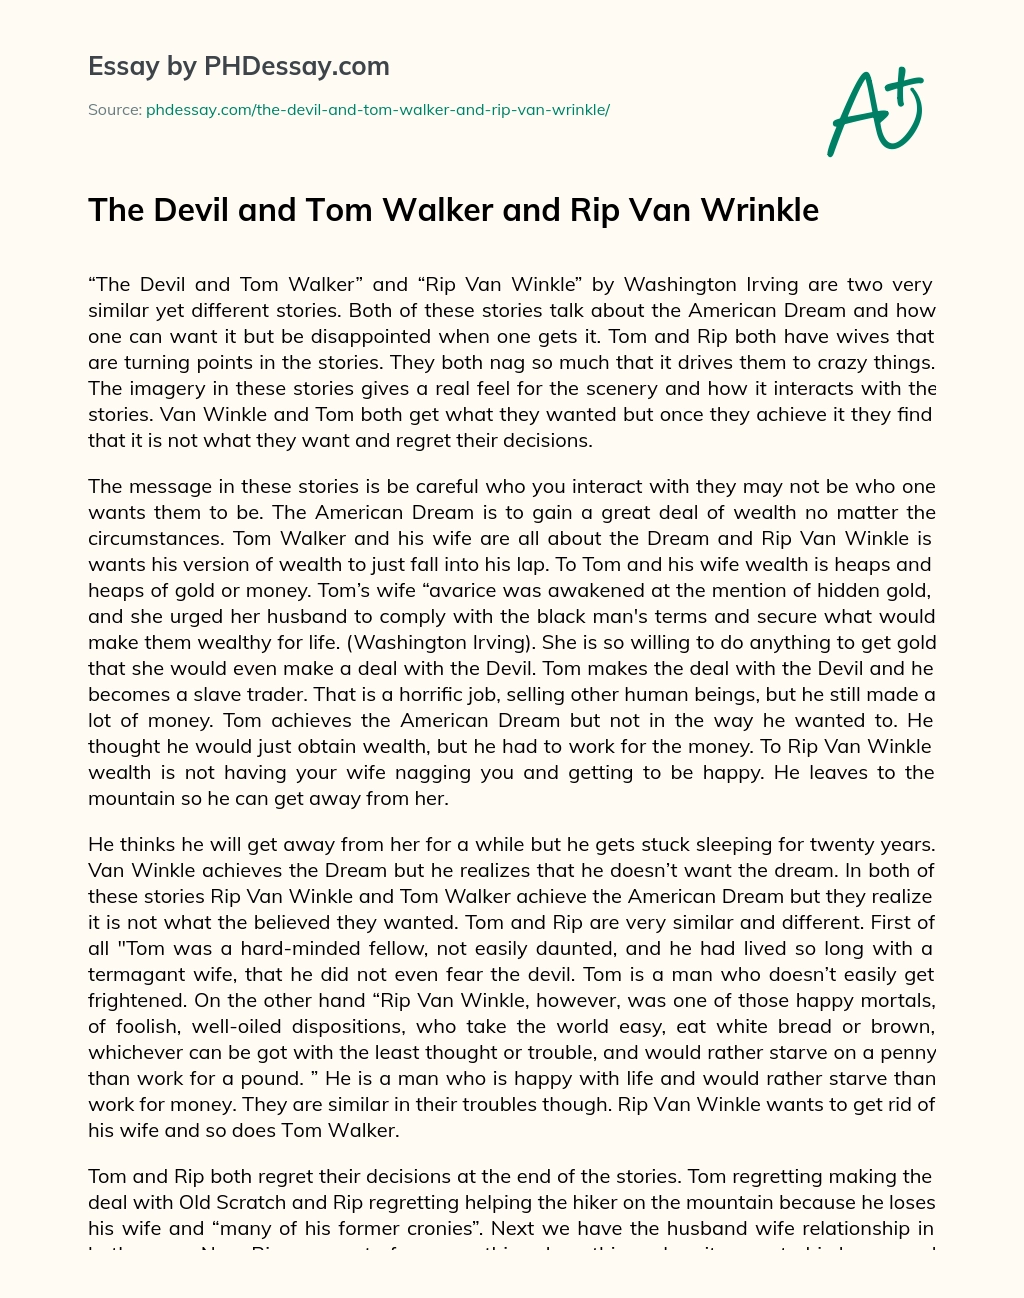 The Devil and Tom Walker and Rip Van Wrinkle essay